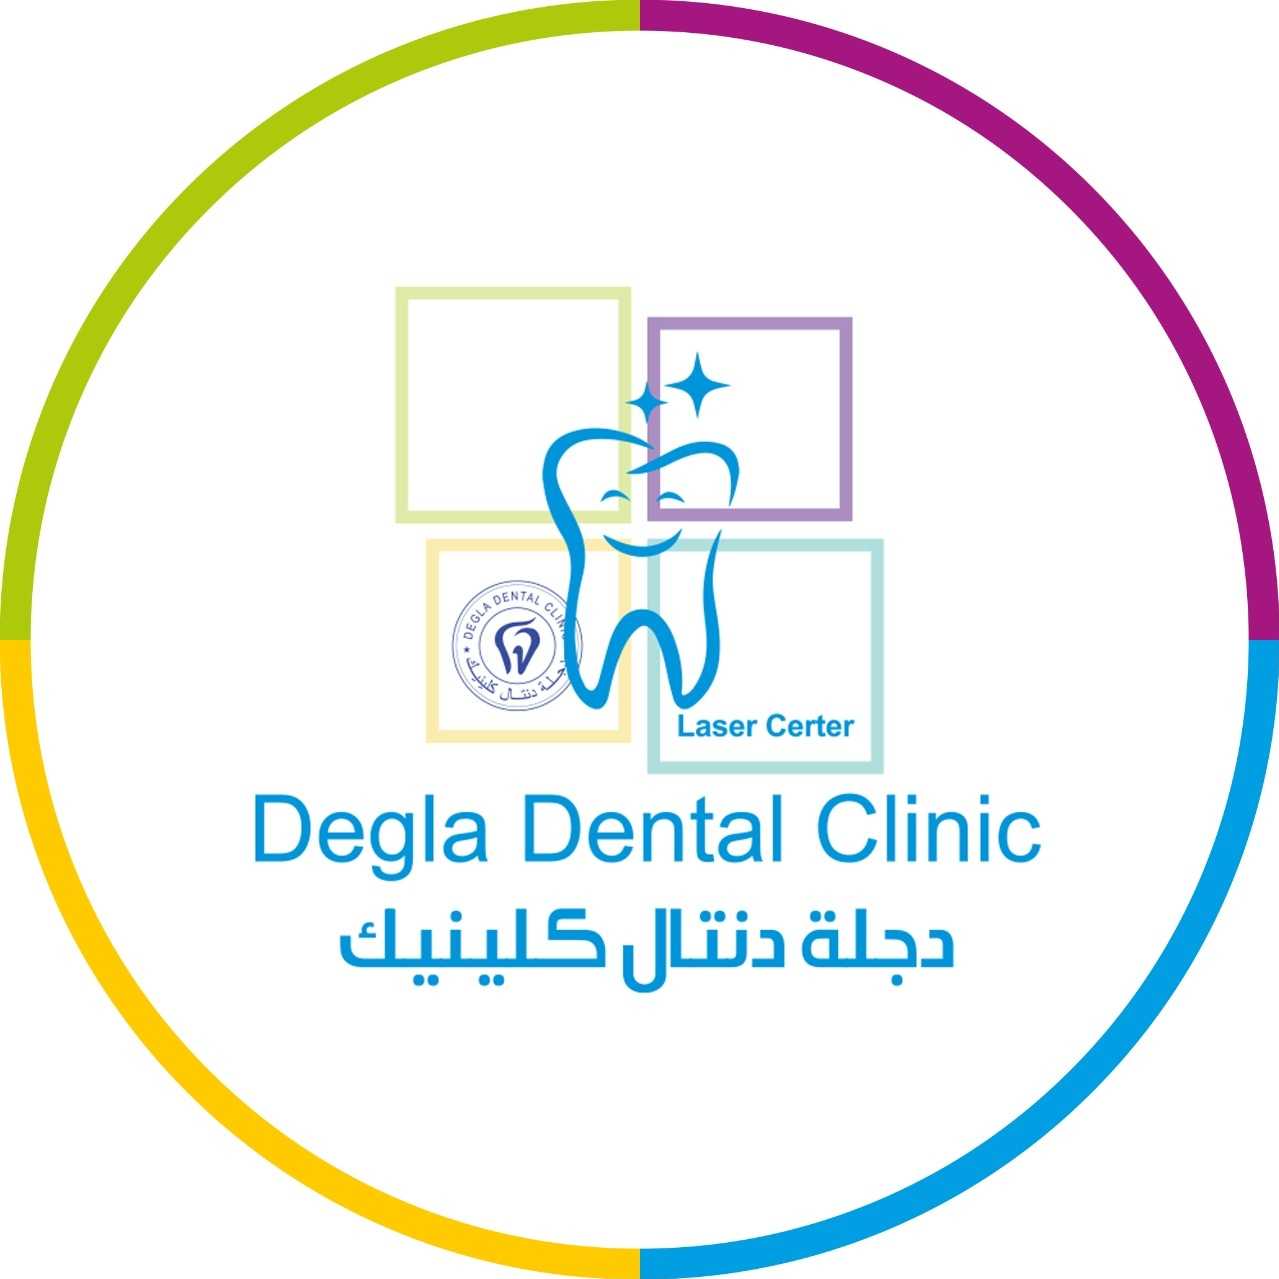 Dr. Mina M. Haroun Degla Dental Clinic